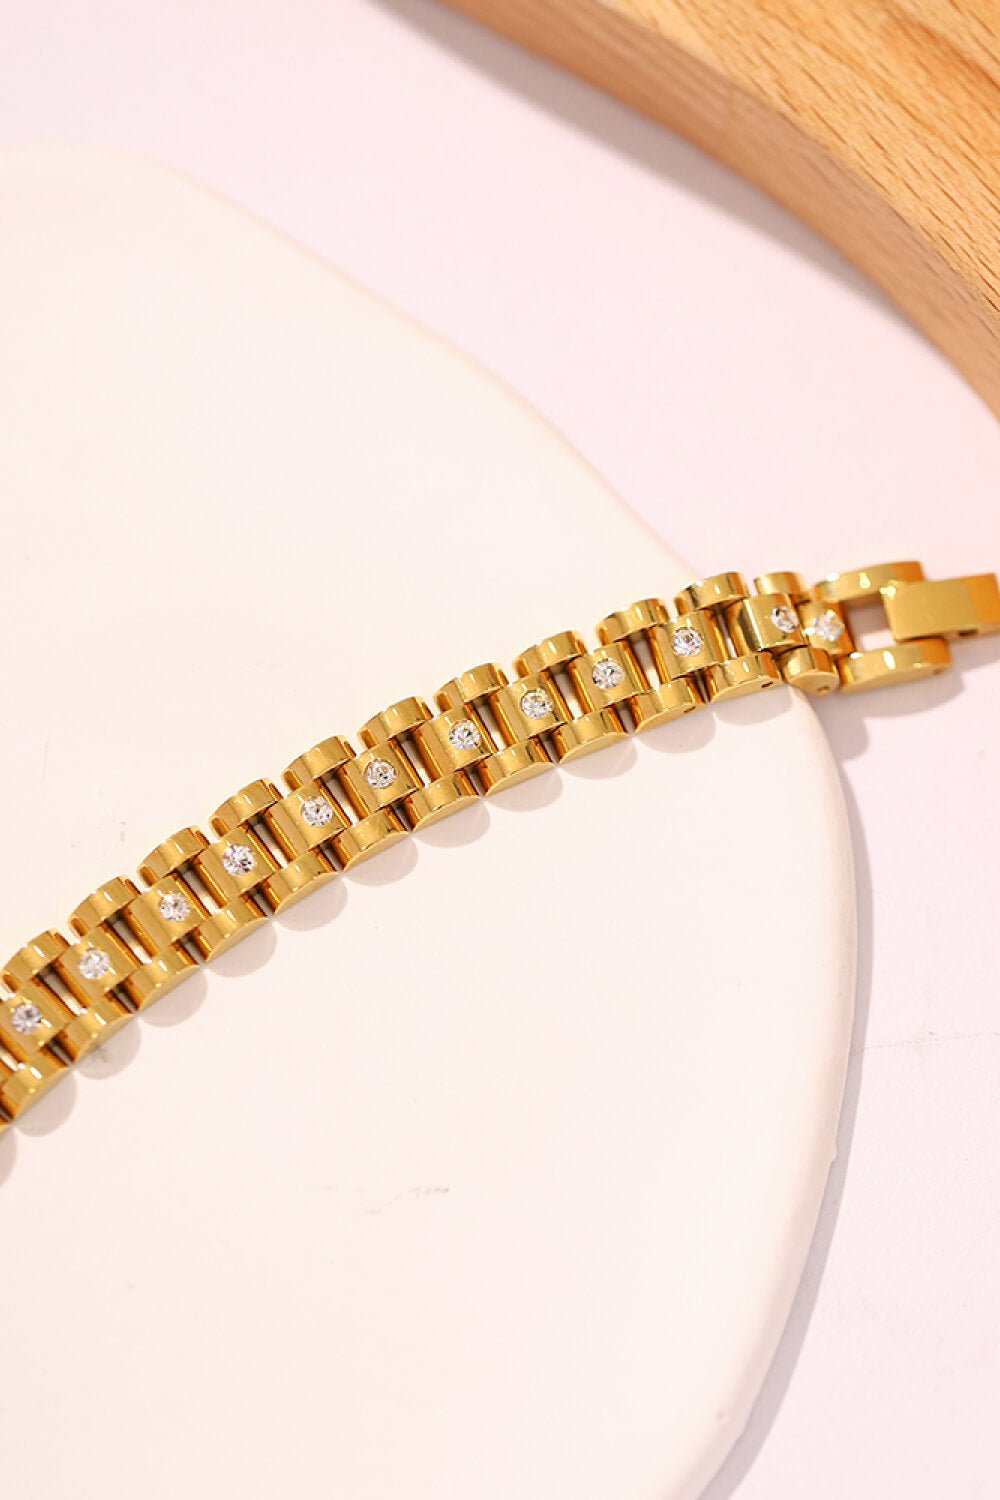 18K Gold-Plated Watch Band Bracelet - Shah S. Sahota